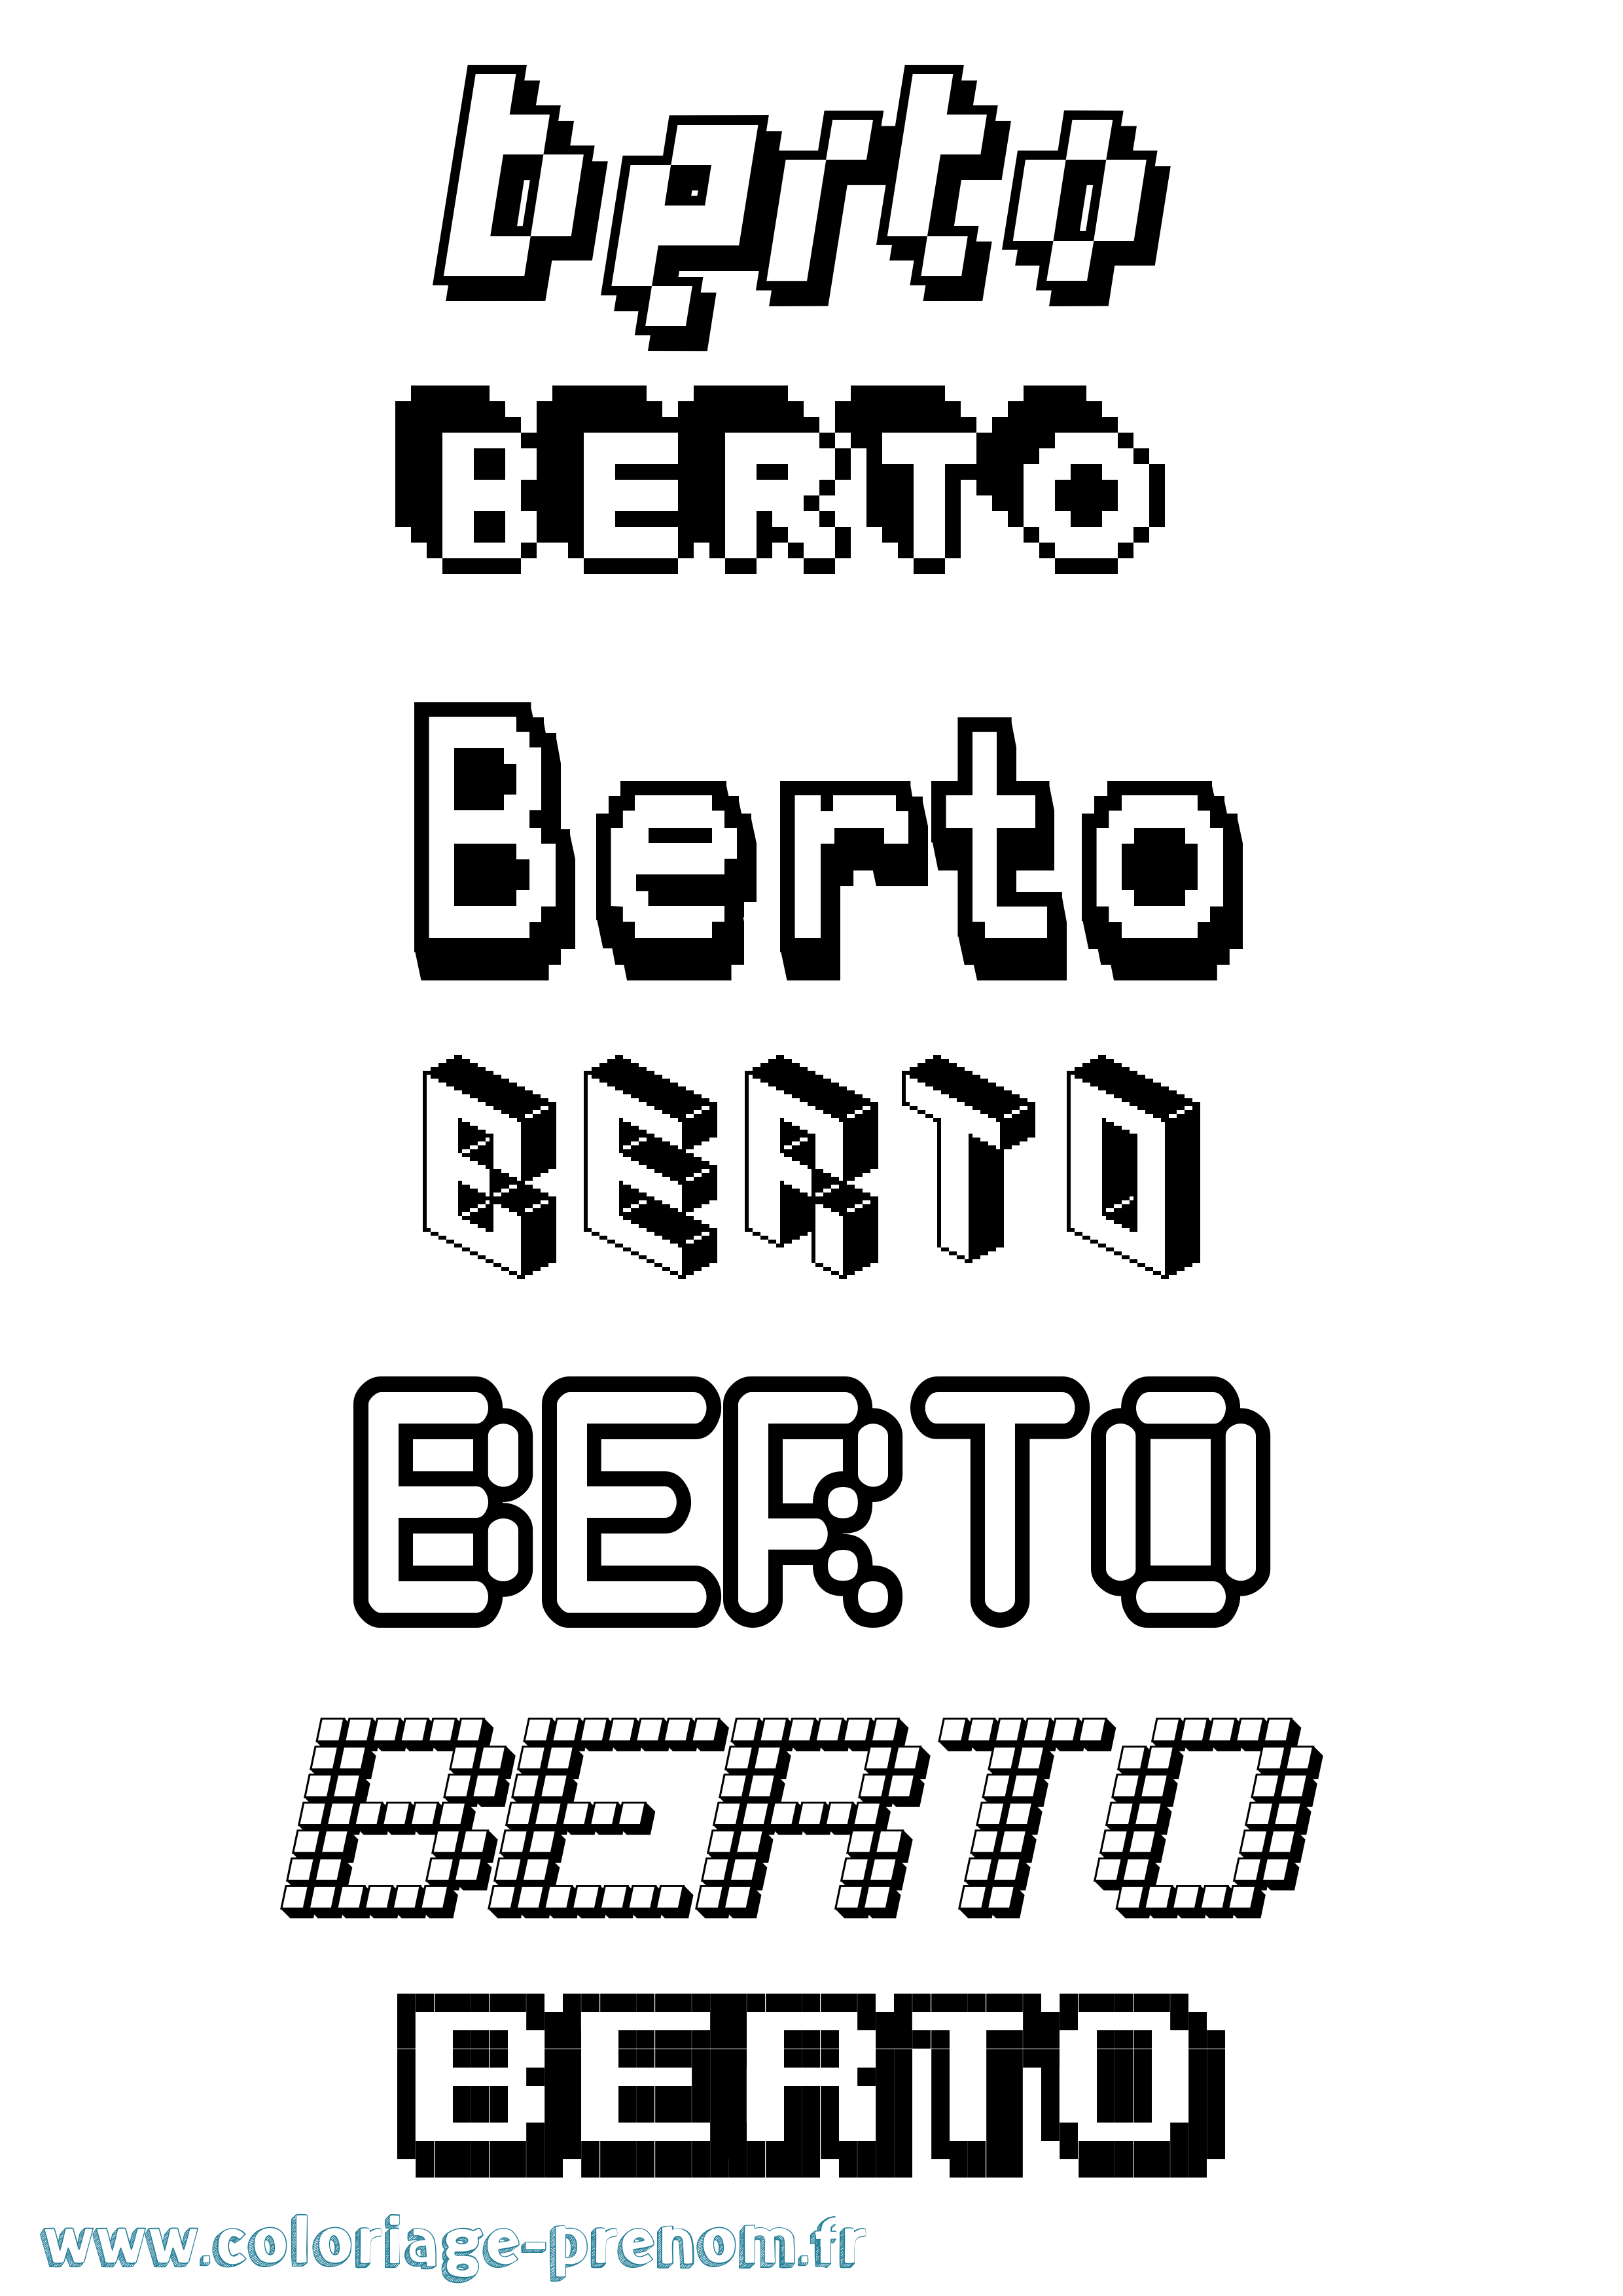 Coloriage prénom Berto Pixel